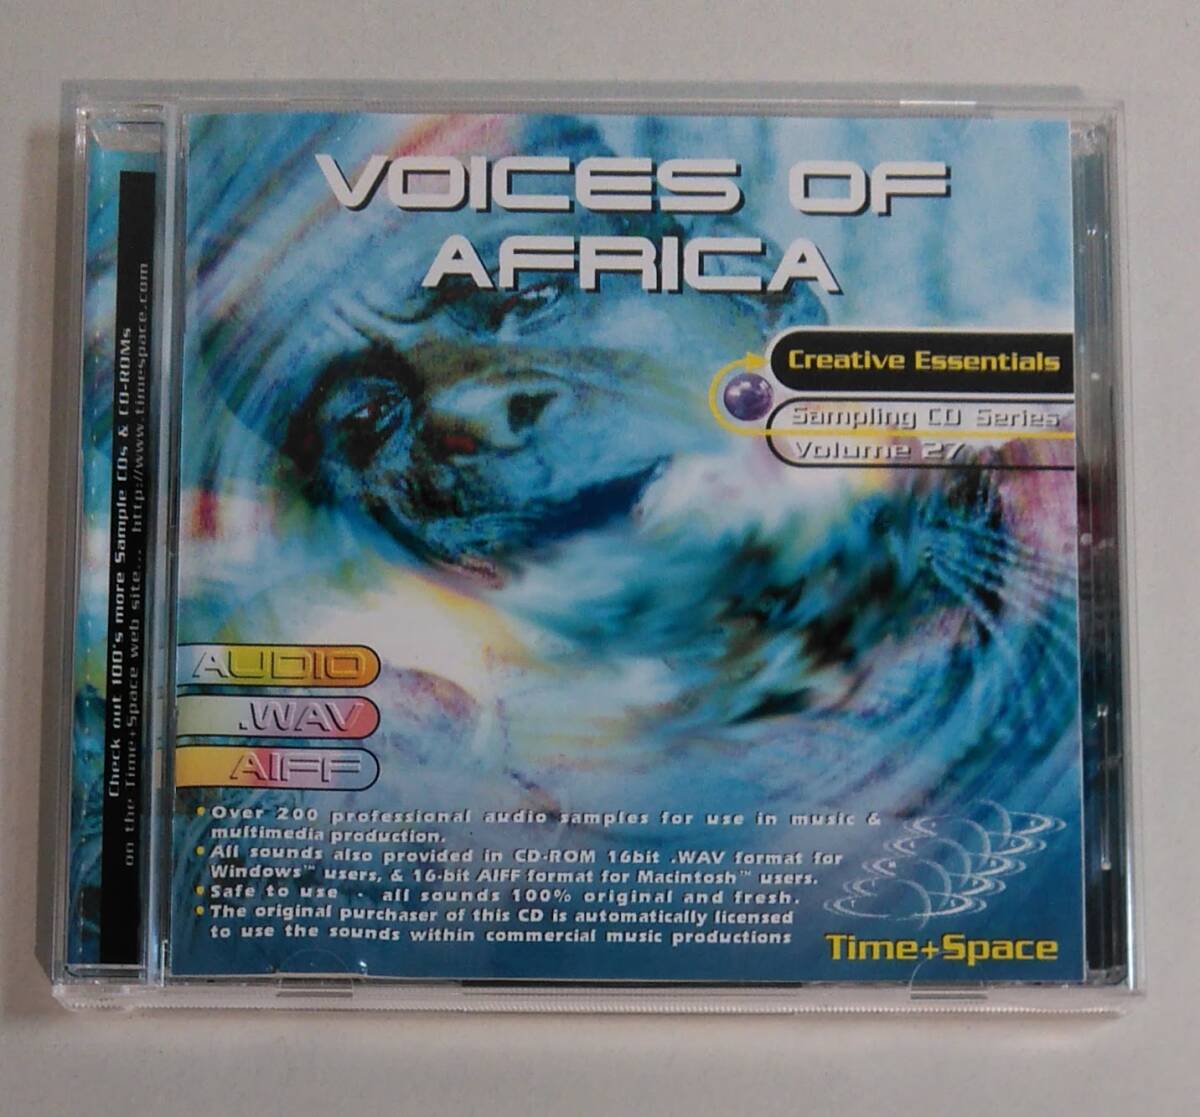 CD-R / sampling CD / sampling CD / Voices of Africa / Creative Essentials Series Vol.27 / TAS CDR 57 / 30168